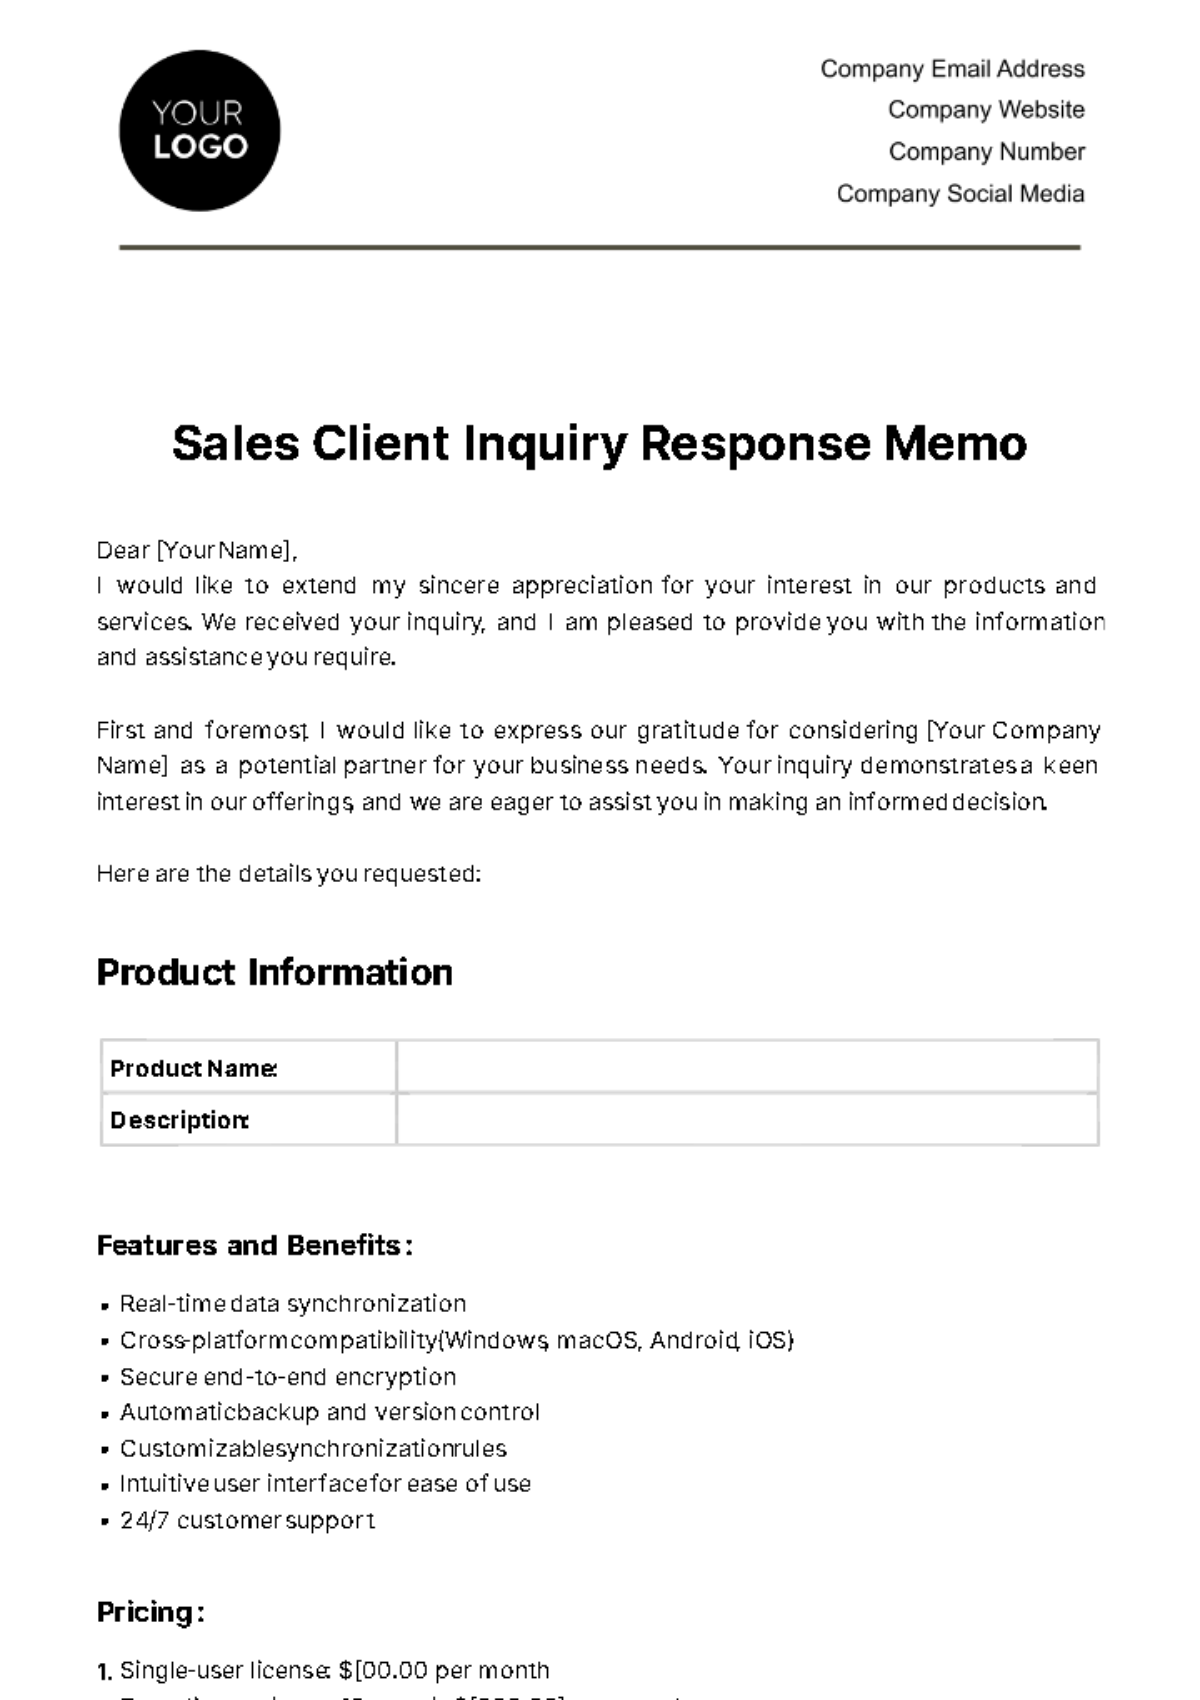 Sales Client Inquiry Response Memo Template